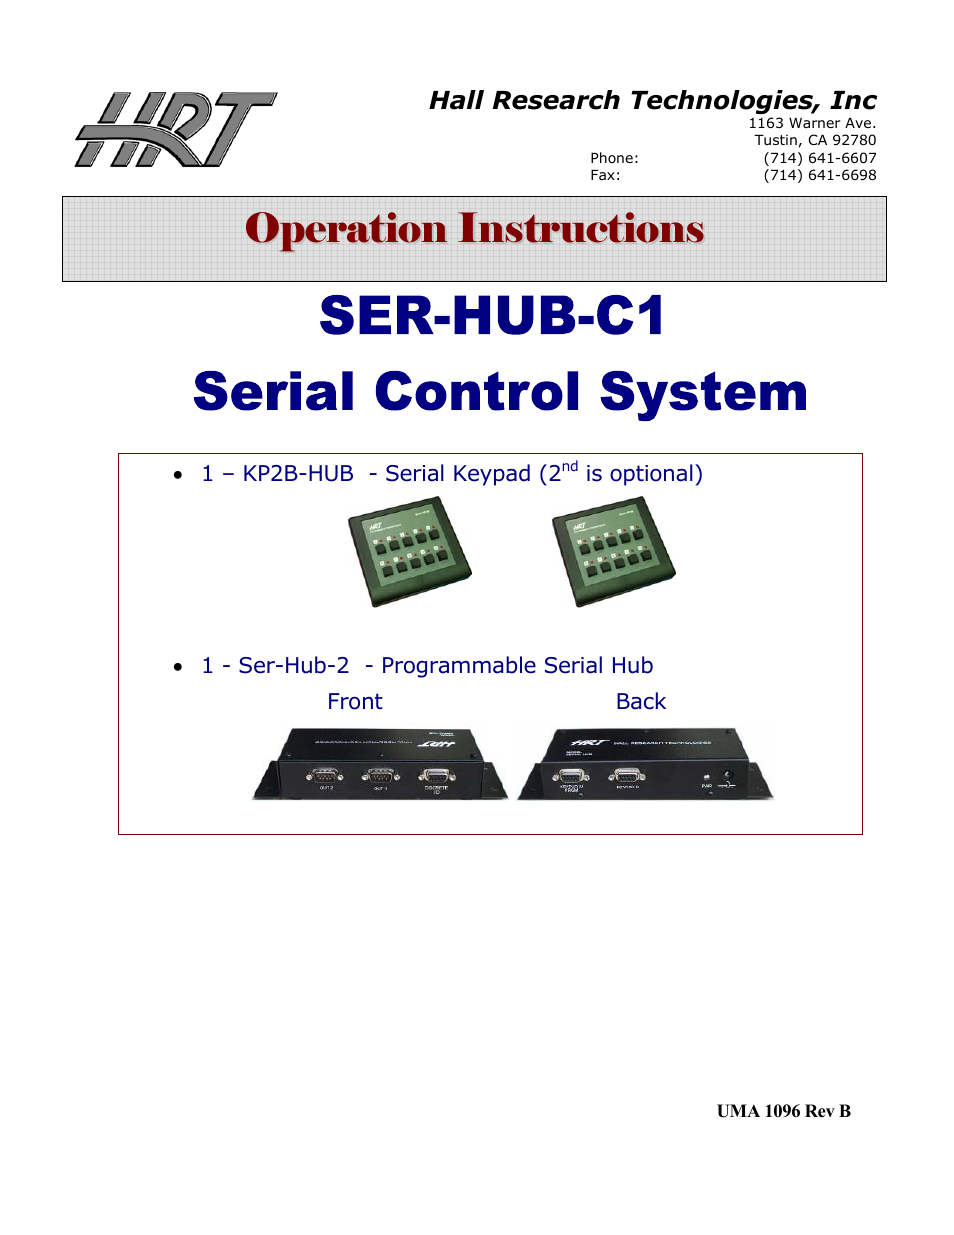 SER-HUB-C1